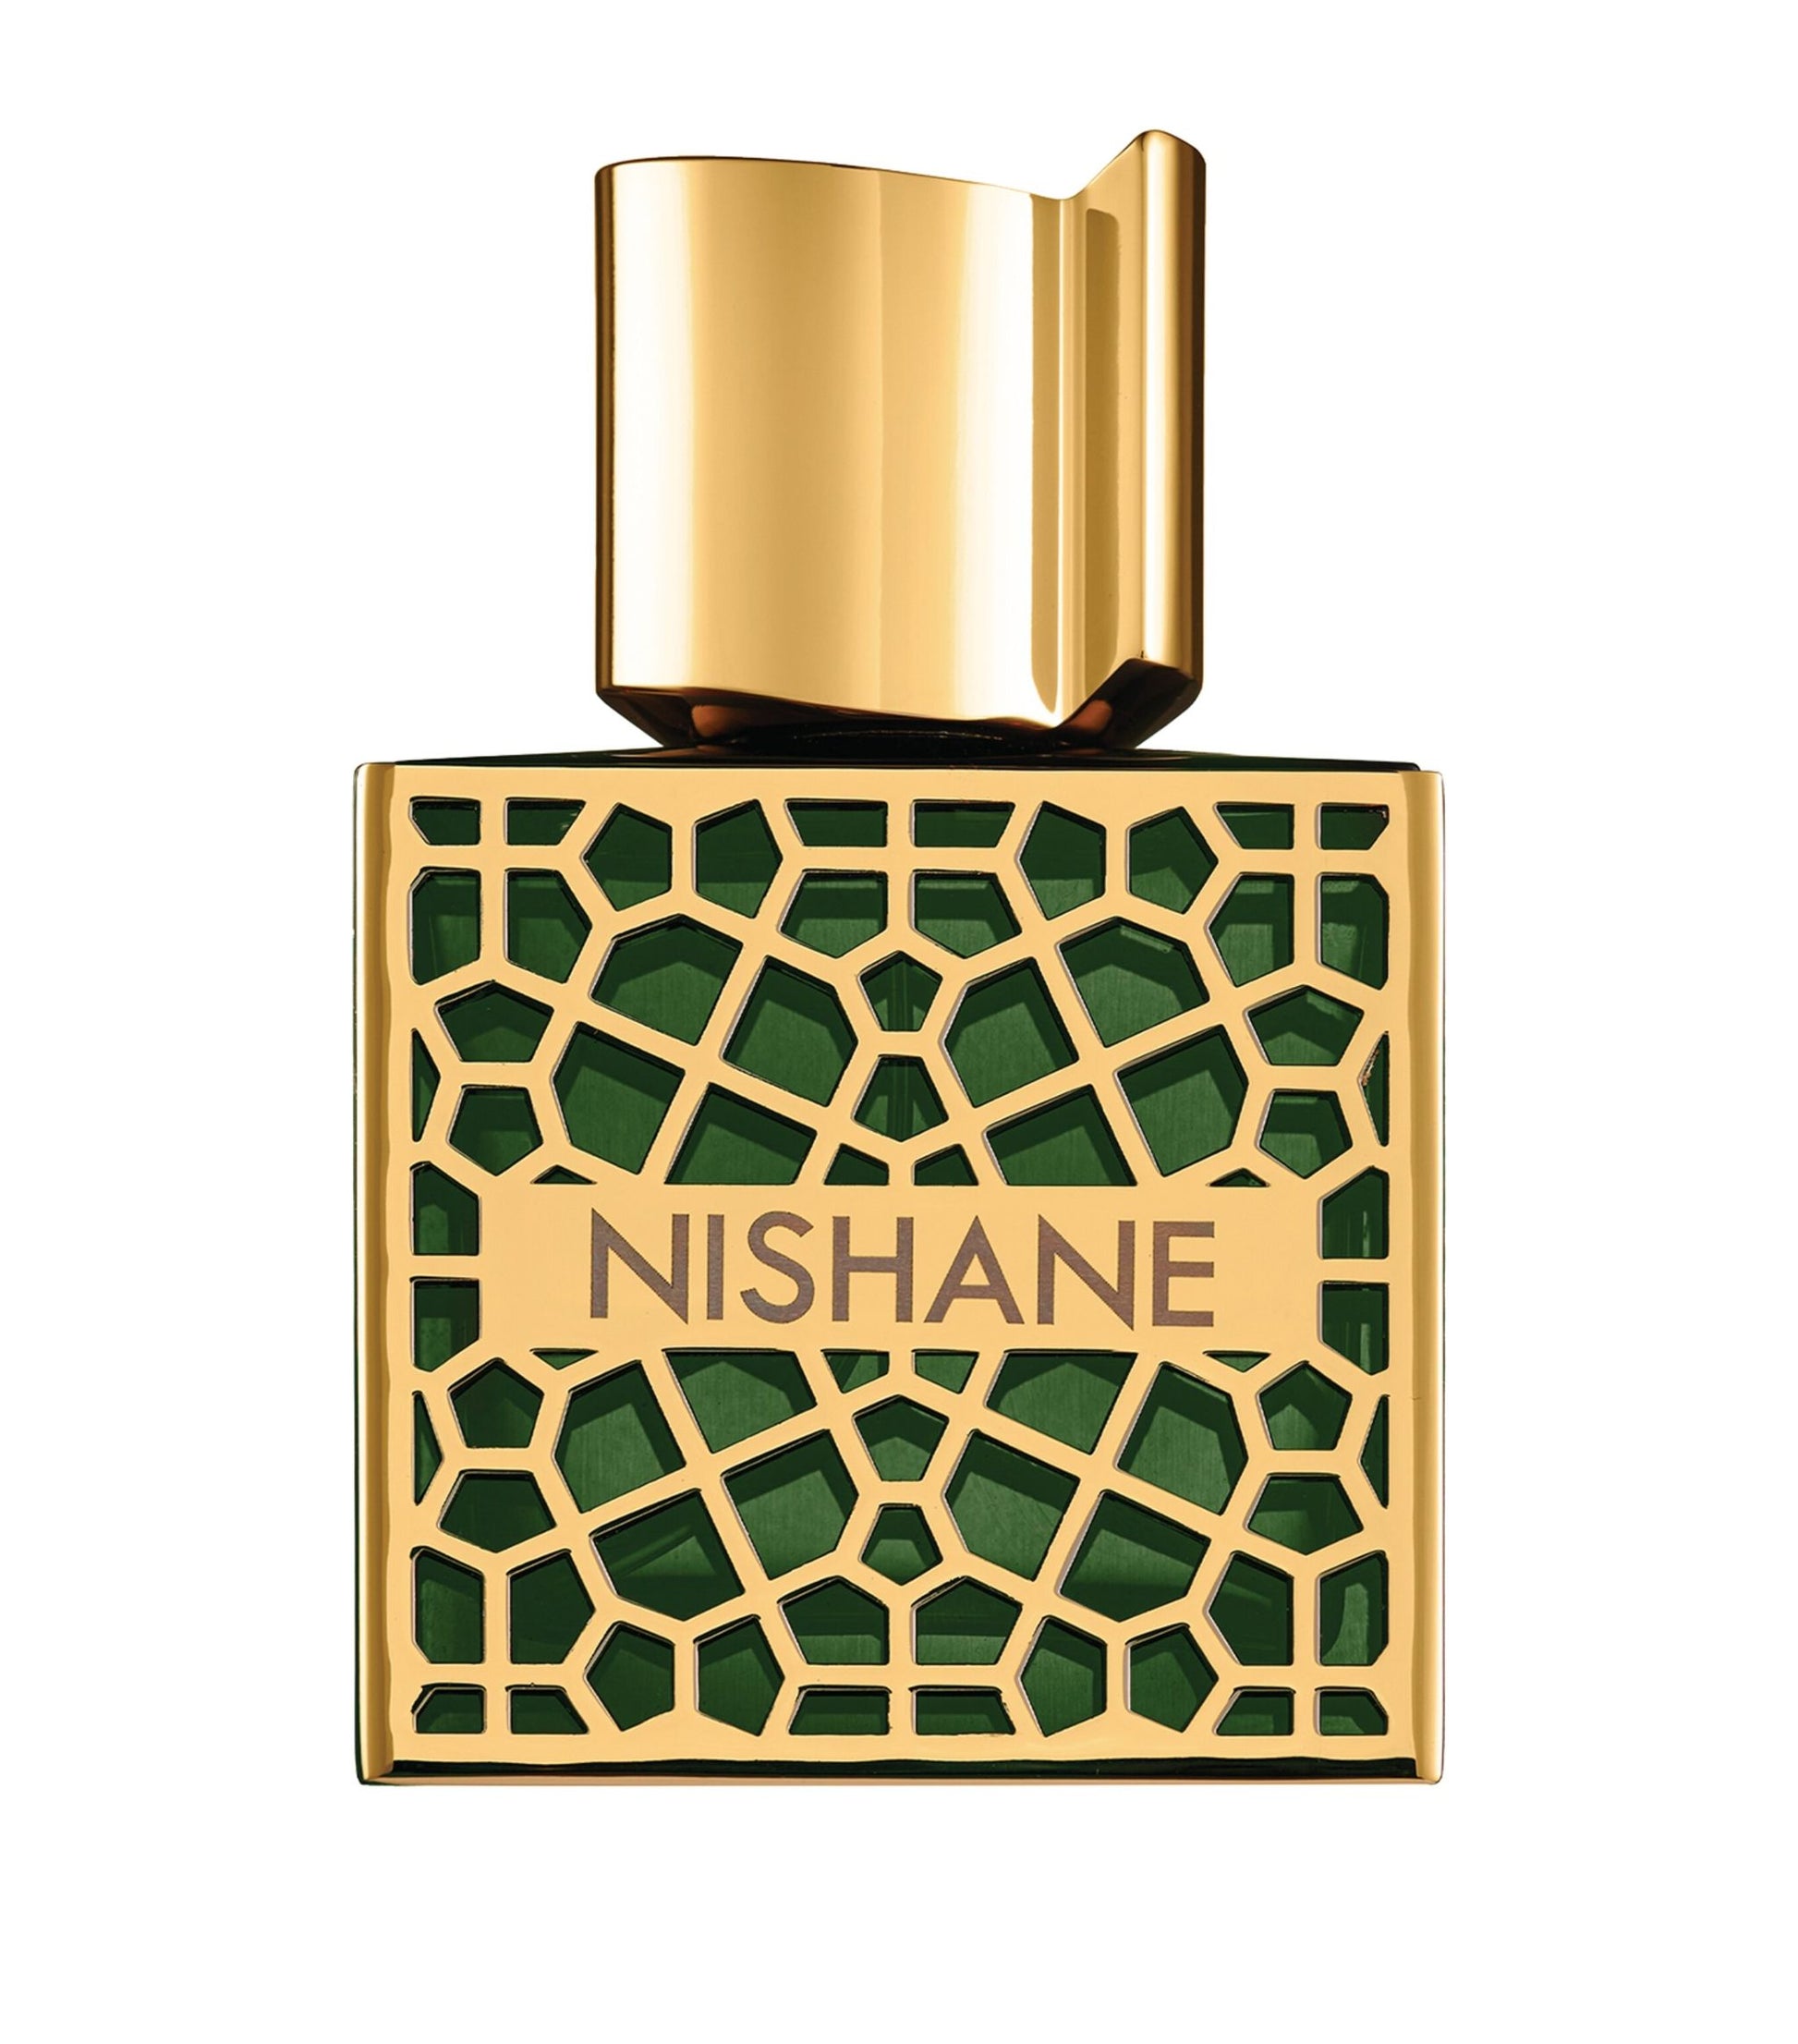 SHEM Nishane Extrait de Parfum 50 ml - Tuxedo.no - Oslo Norway nettbutikk